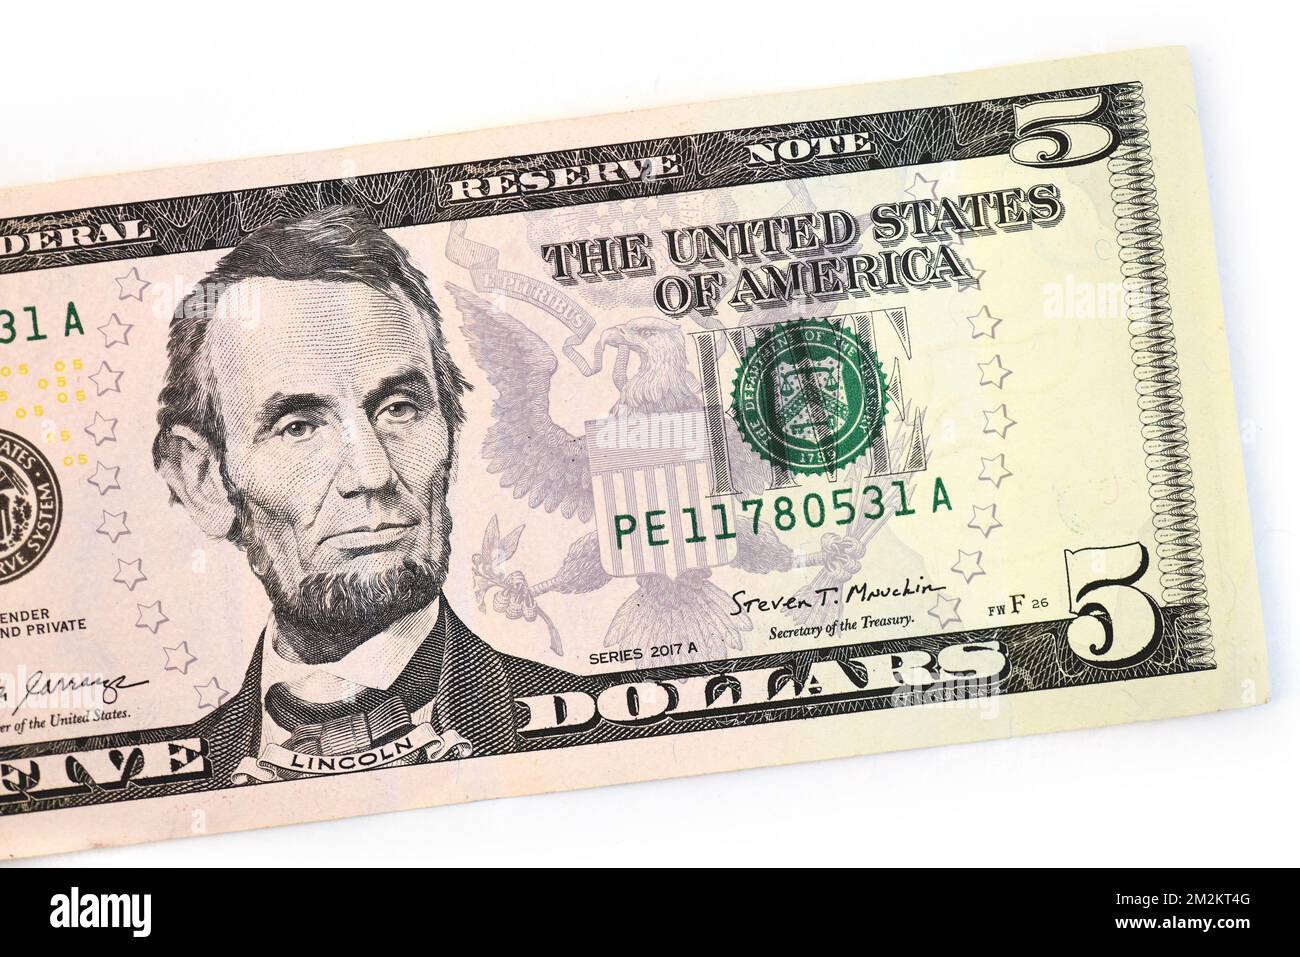 USA bank note Stock Photo